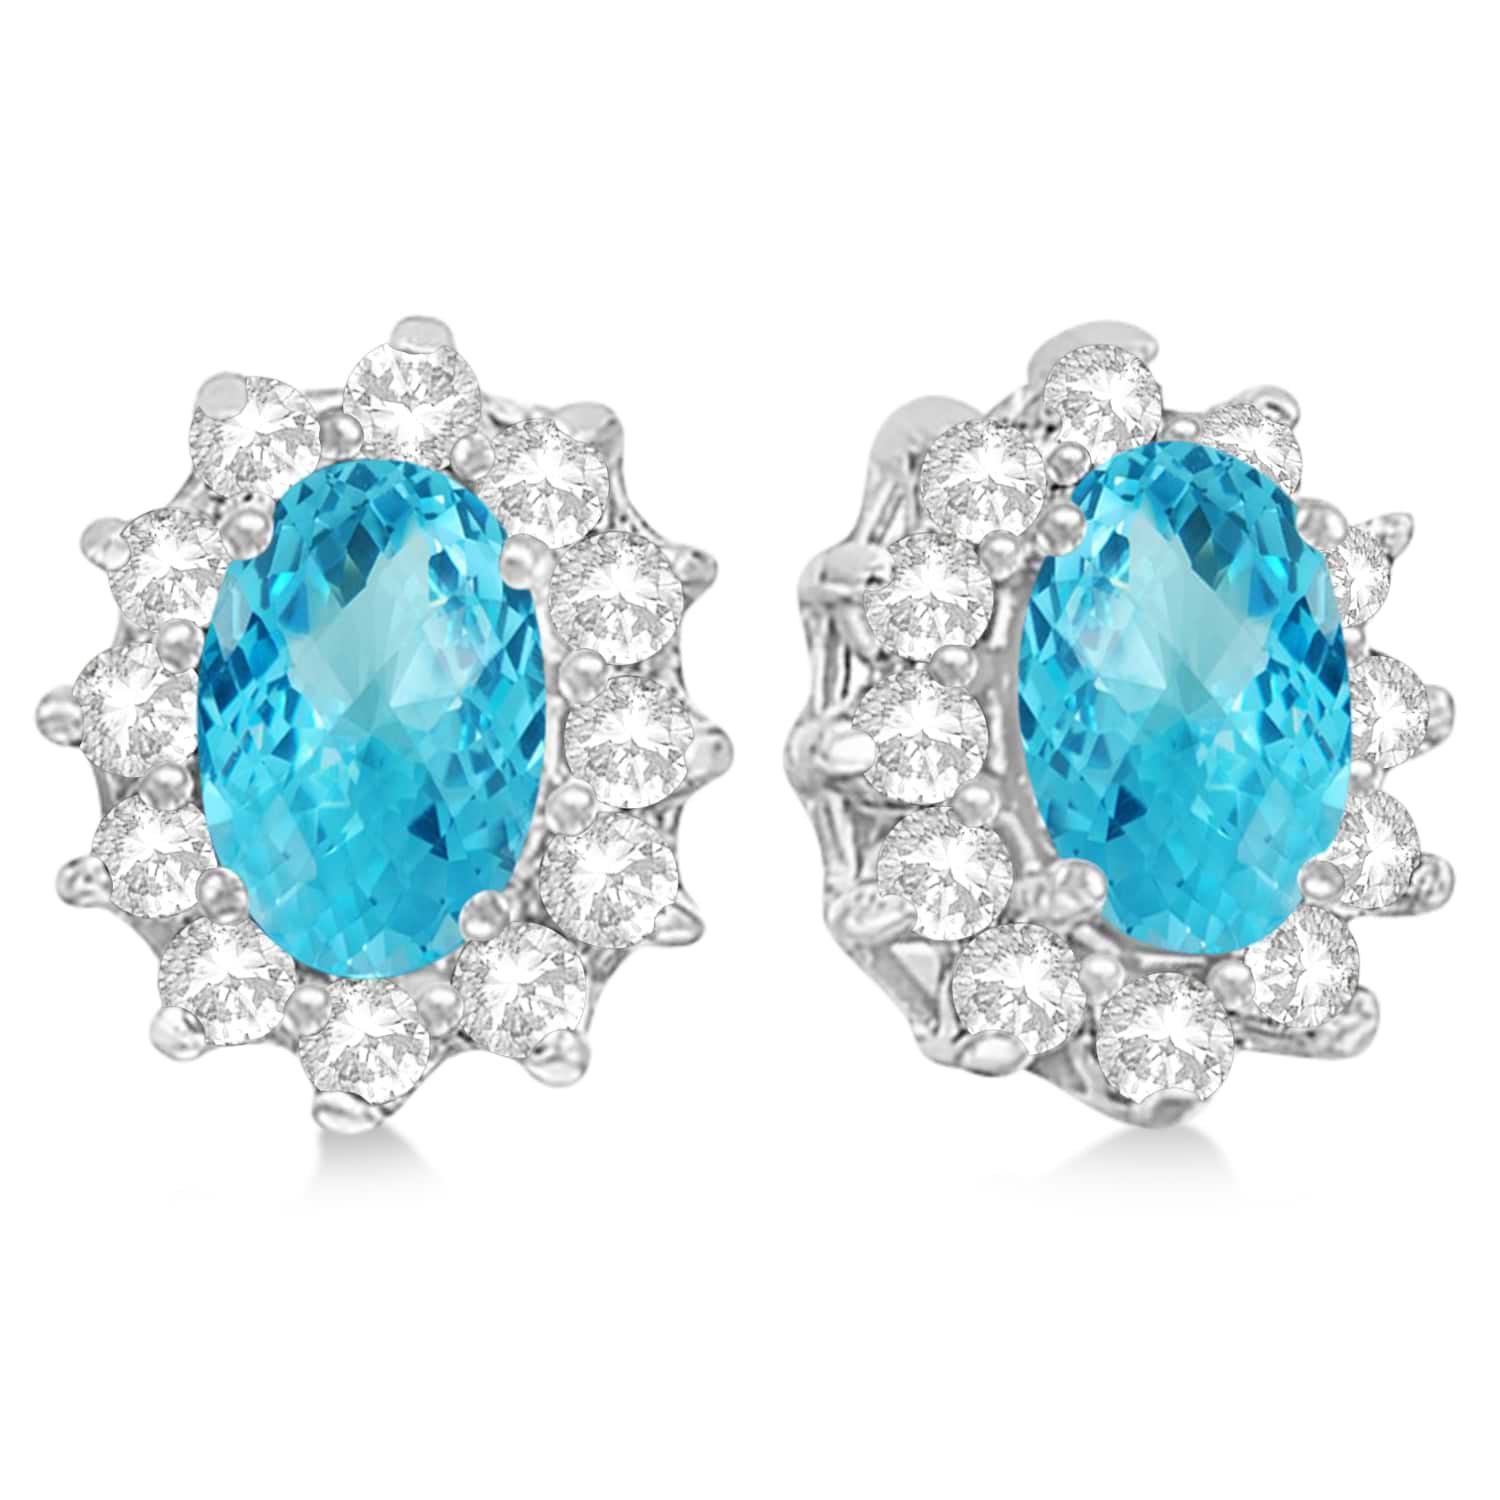 Oval Blue Topaz & Diamond Accented Earrings 14k White Gold (2.05ct)